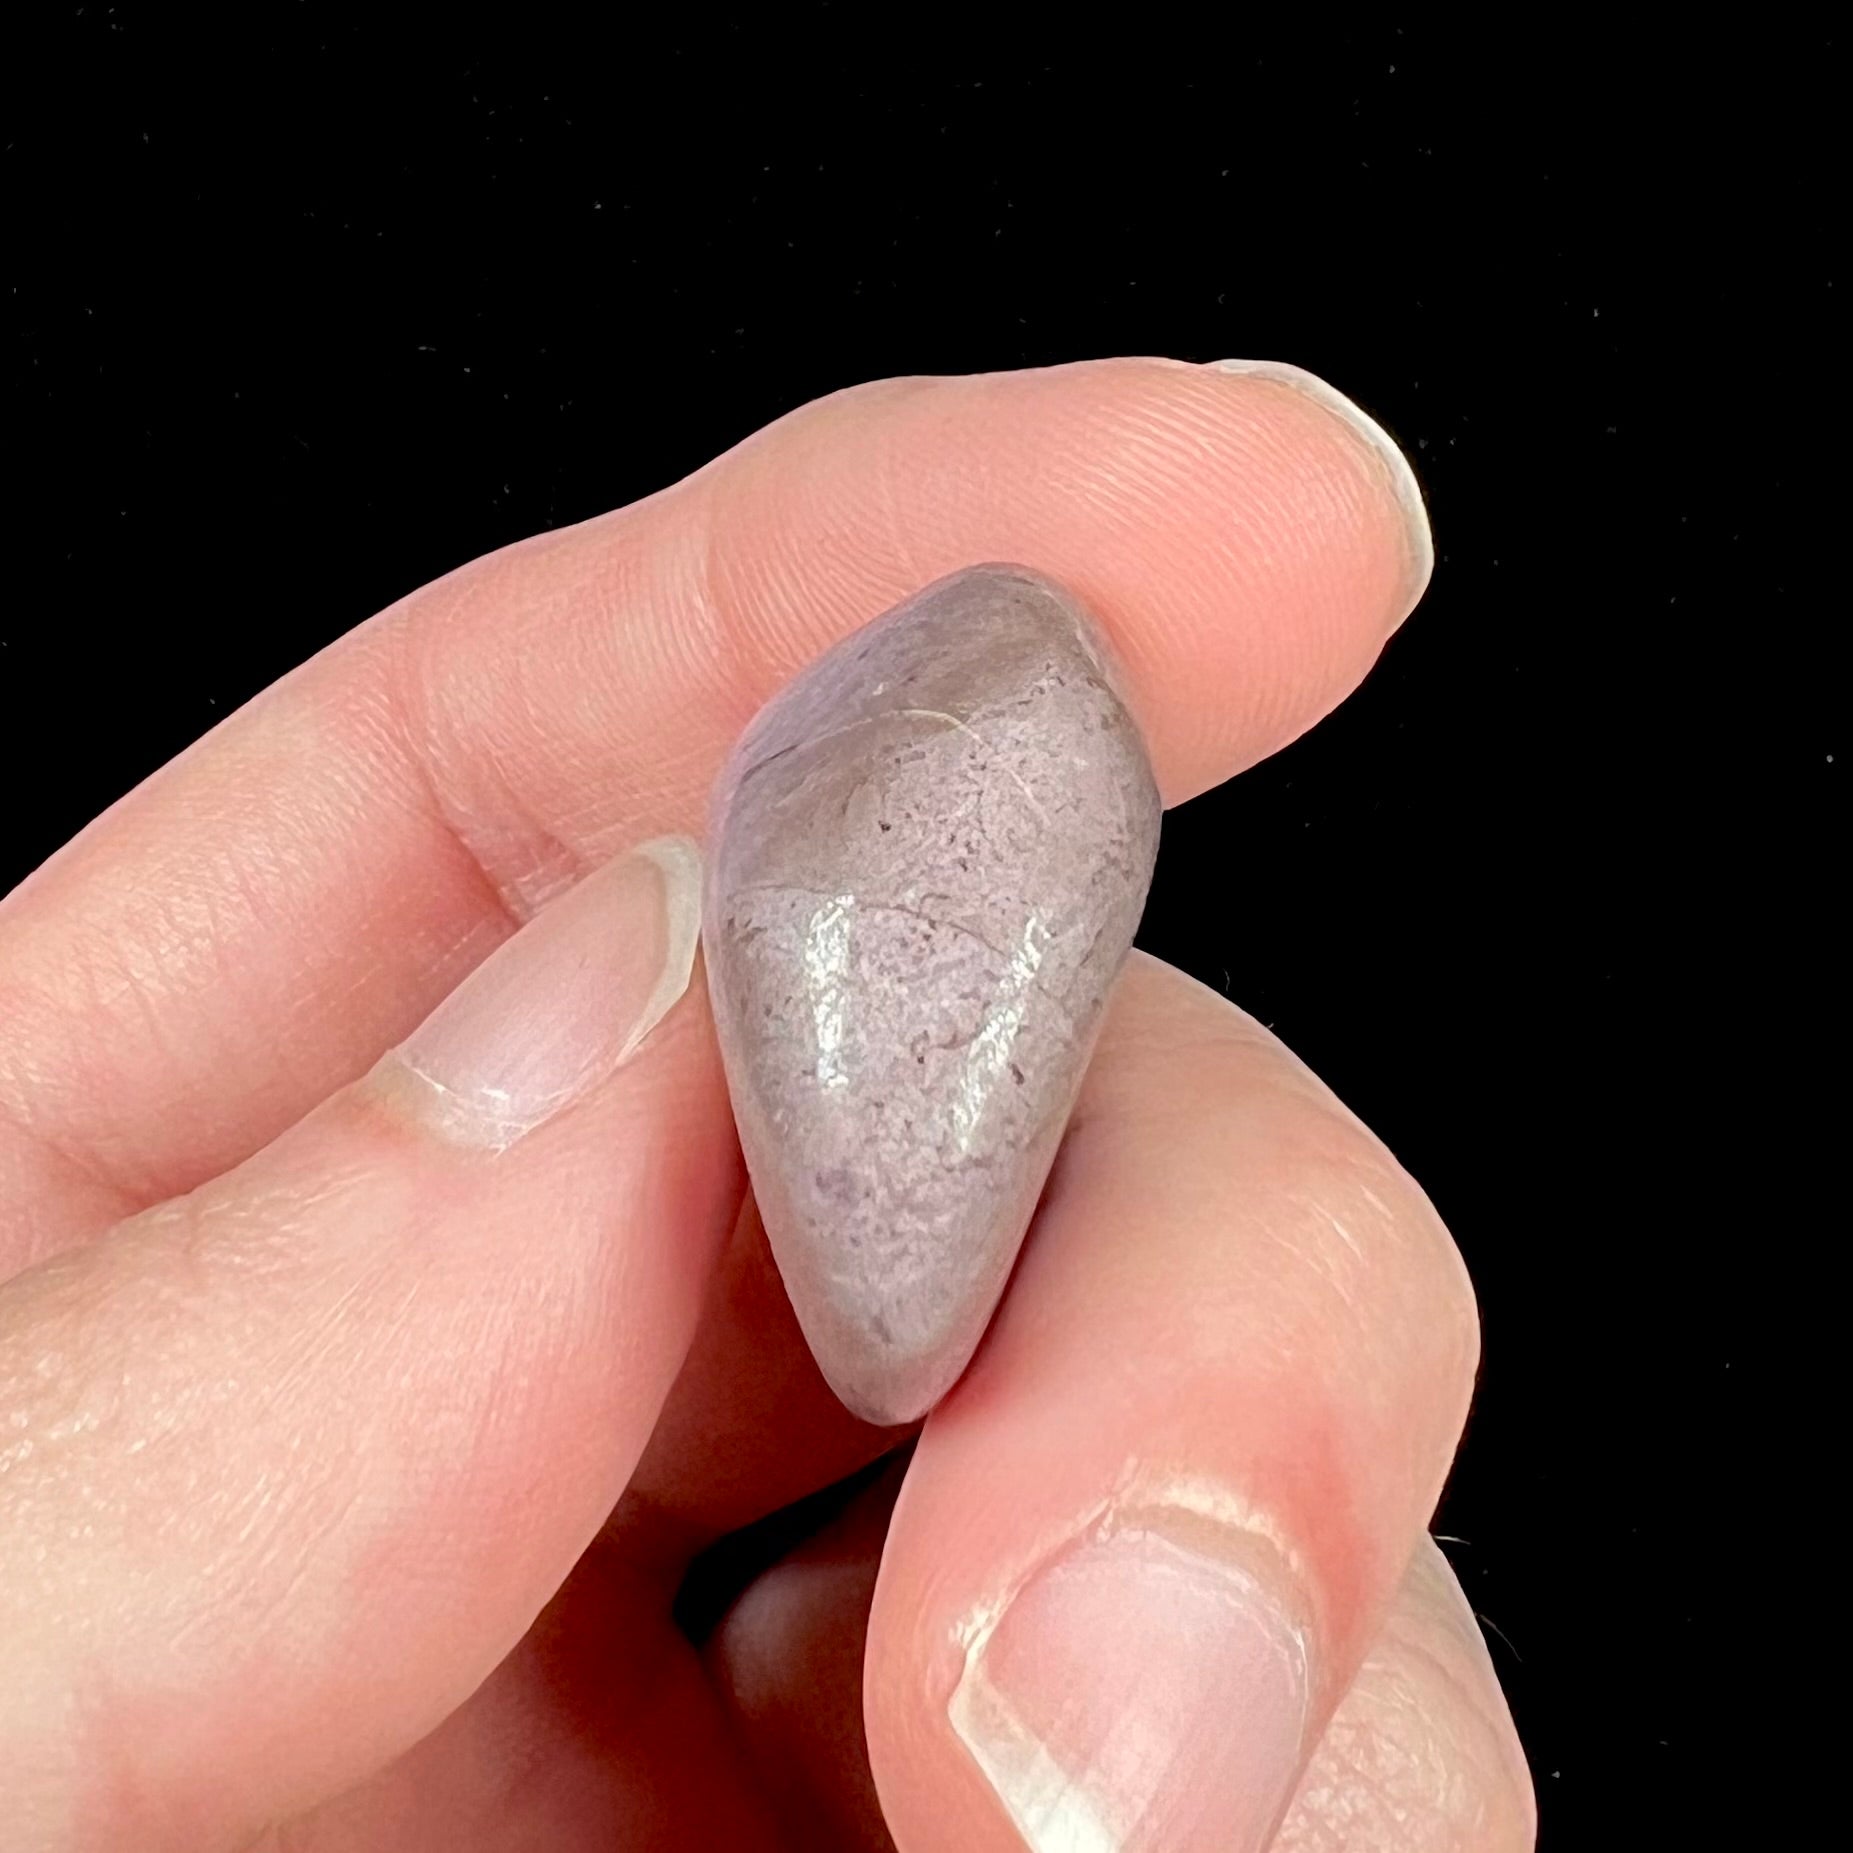 A tumble polished turkiyenite purple jade stone from Bursa, Turkey.